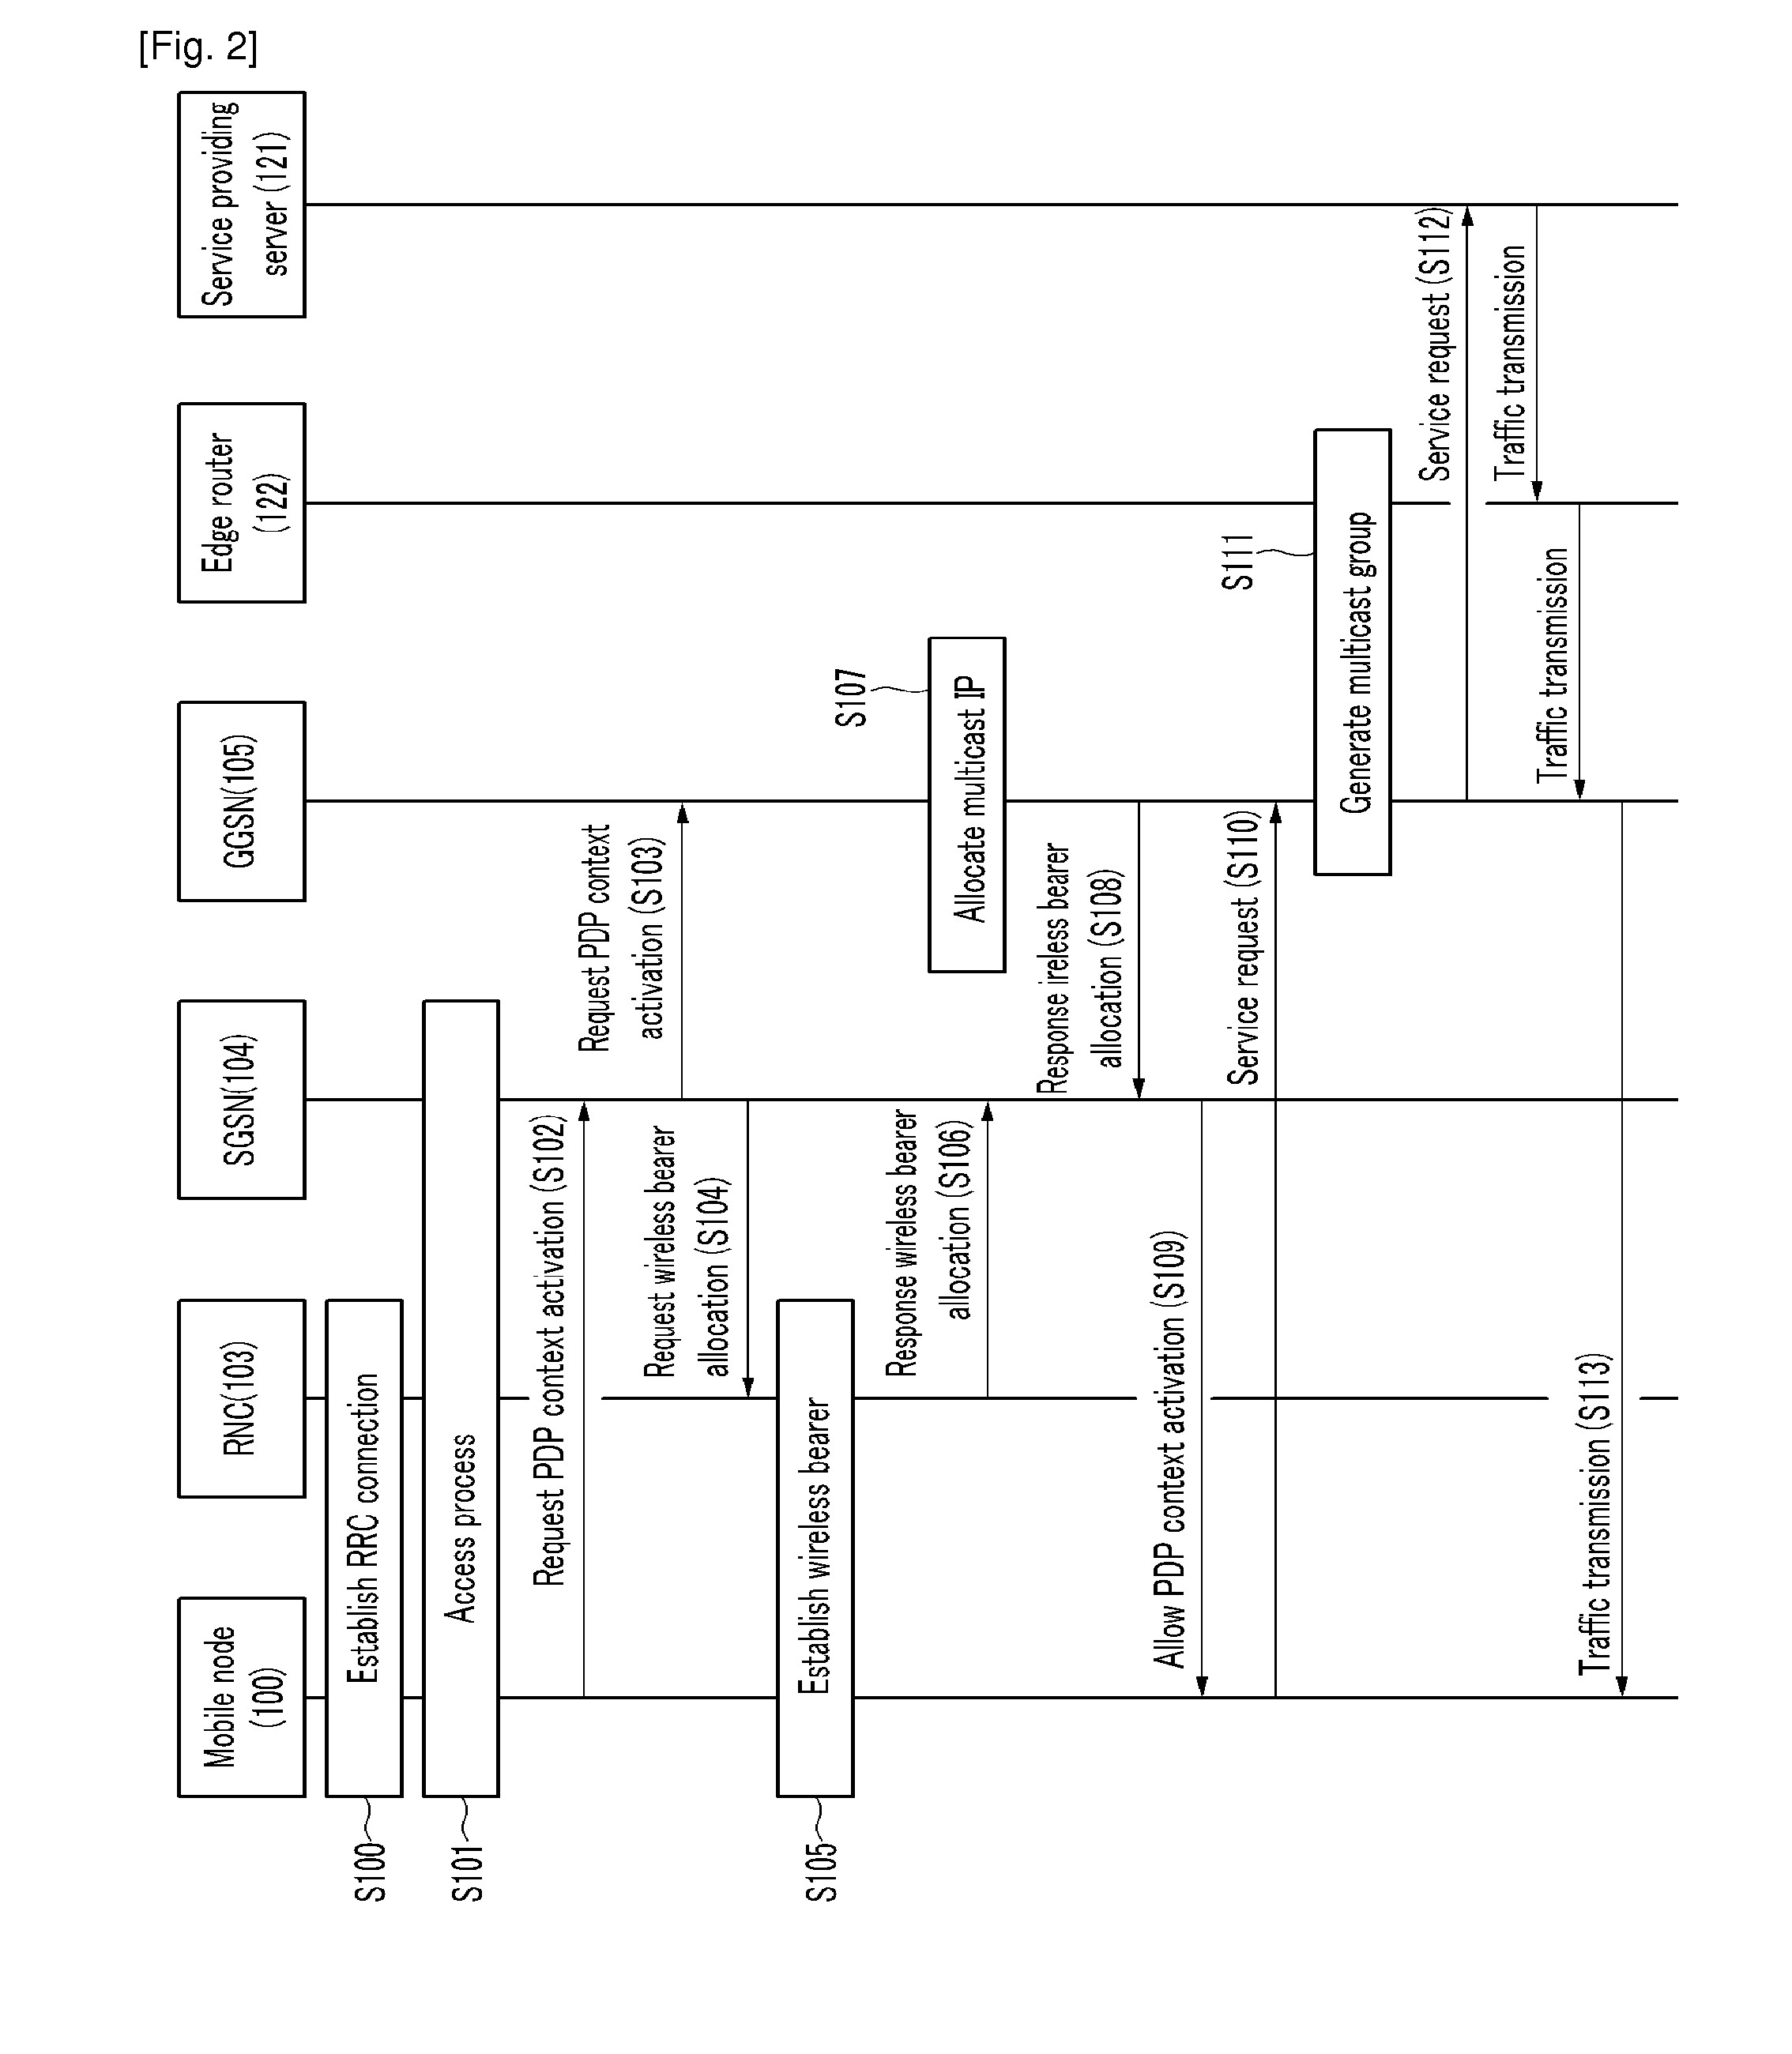 Handover method between systems of multi-mode terminal